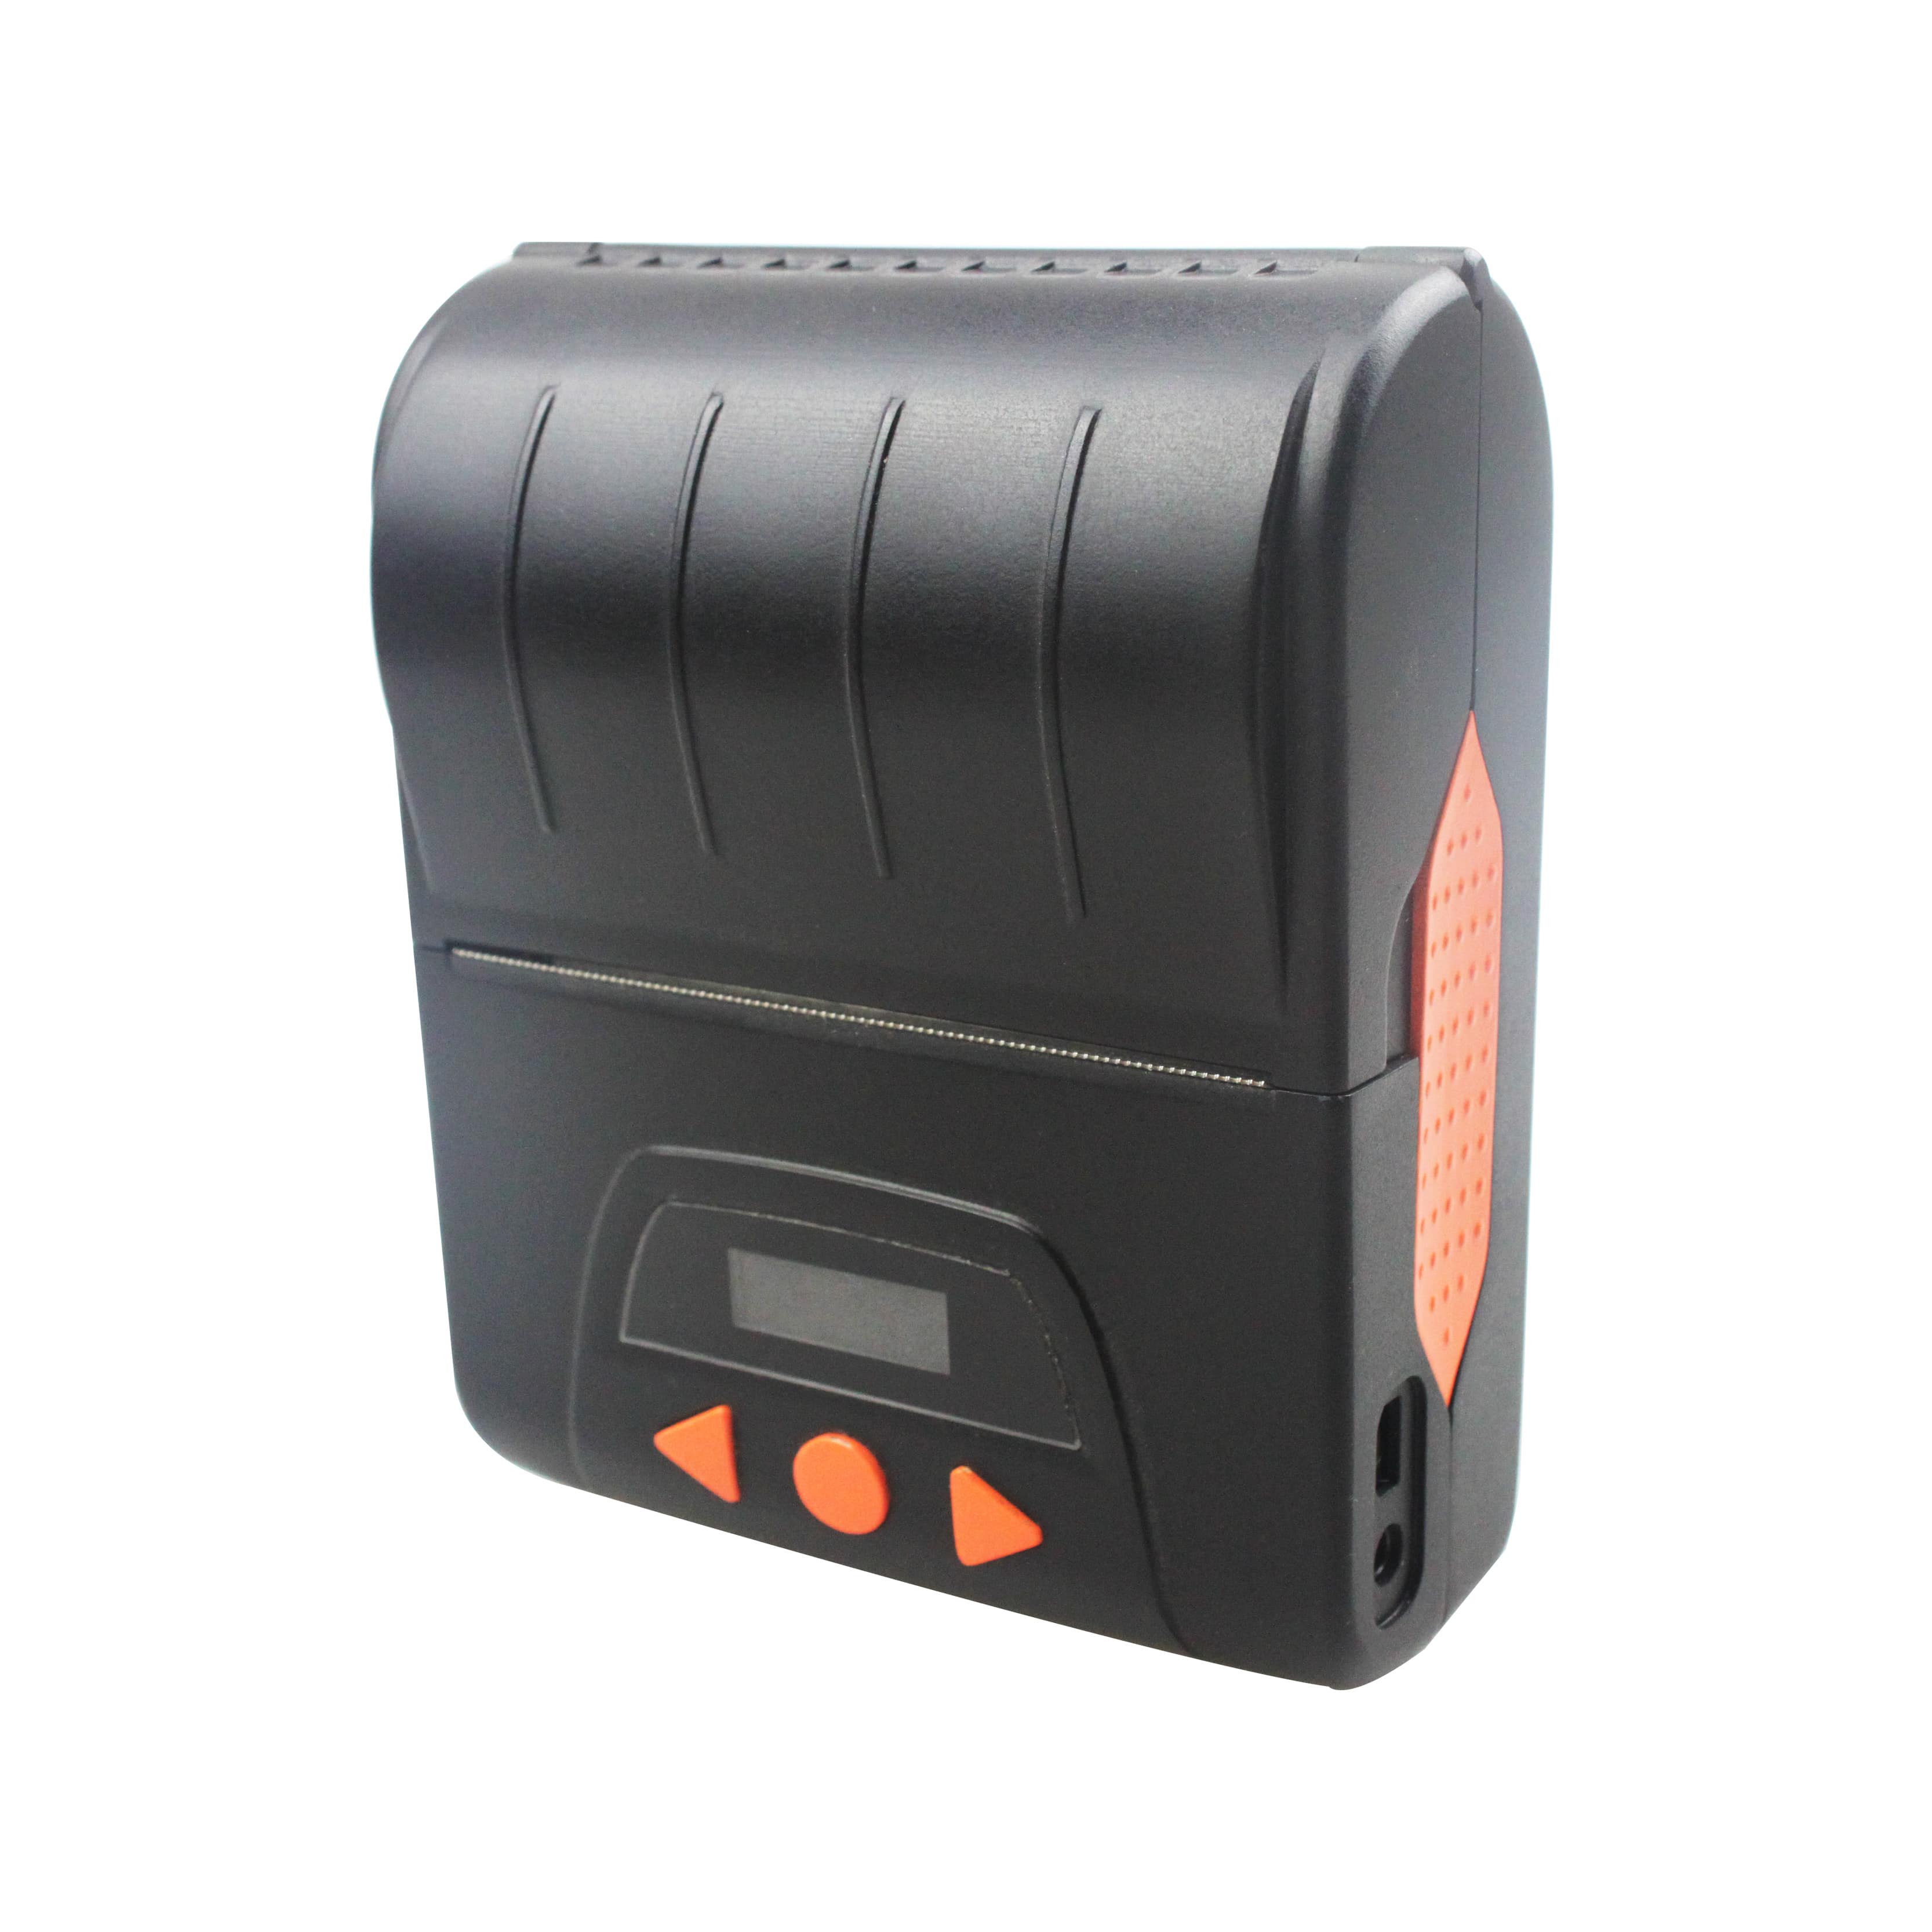 Cashino KMP-III 80mm bluetooth gratuit SDK portable mini imprimante de reçus portable
